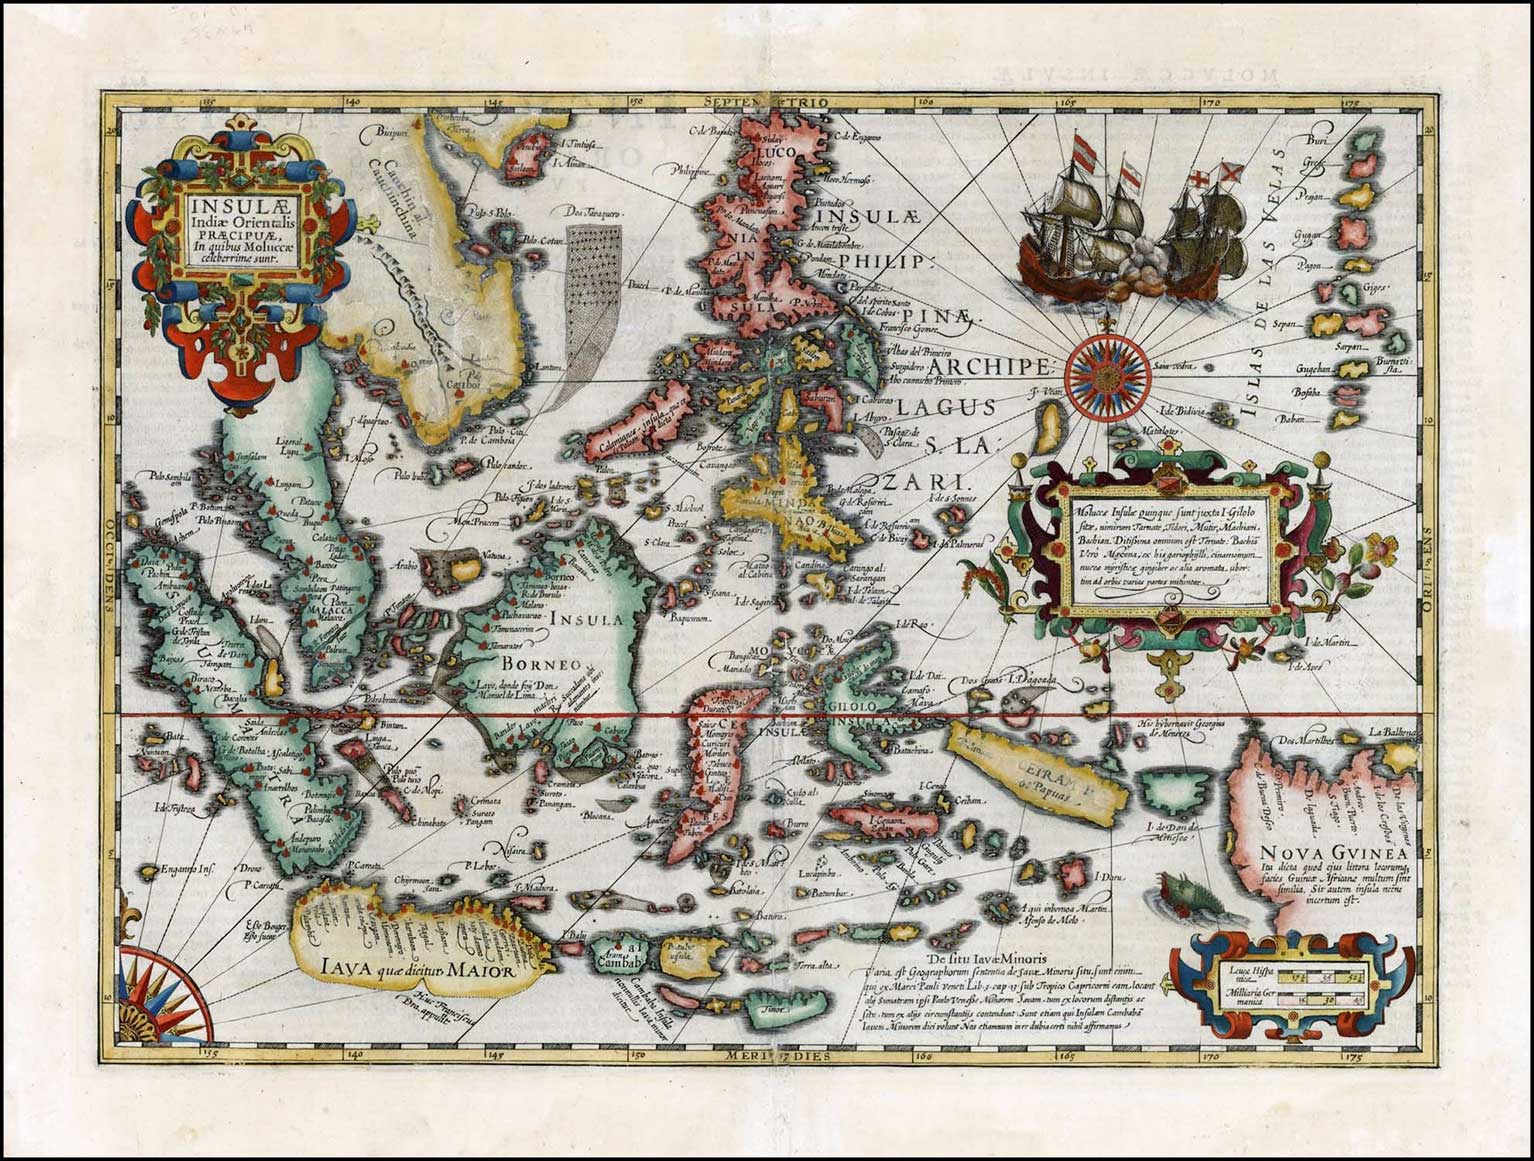 Map of the East Indies by Jodocus Hondius in 1606